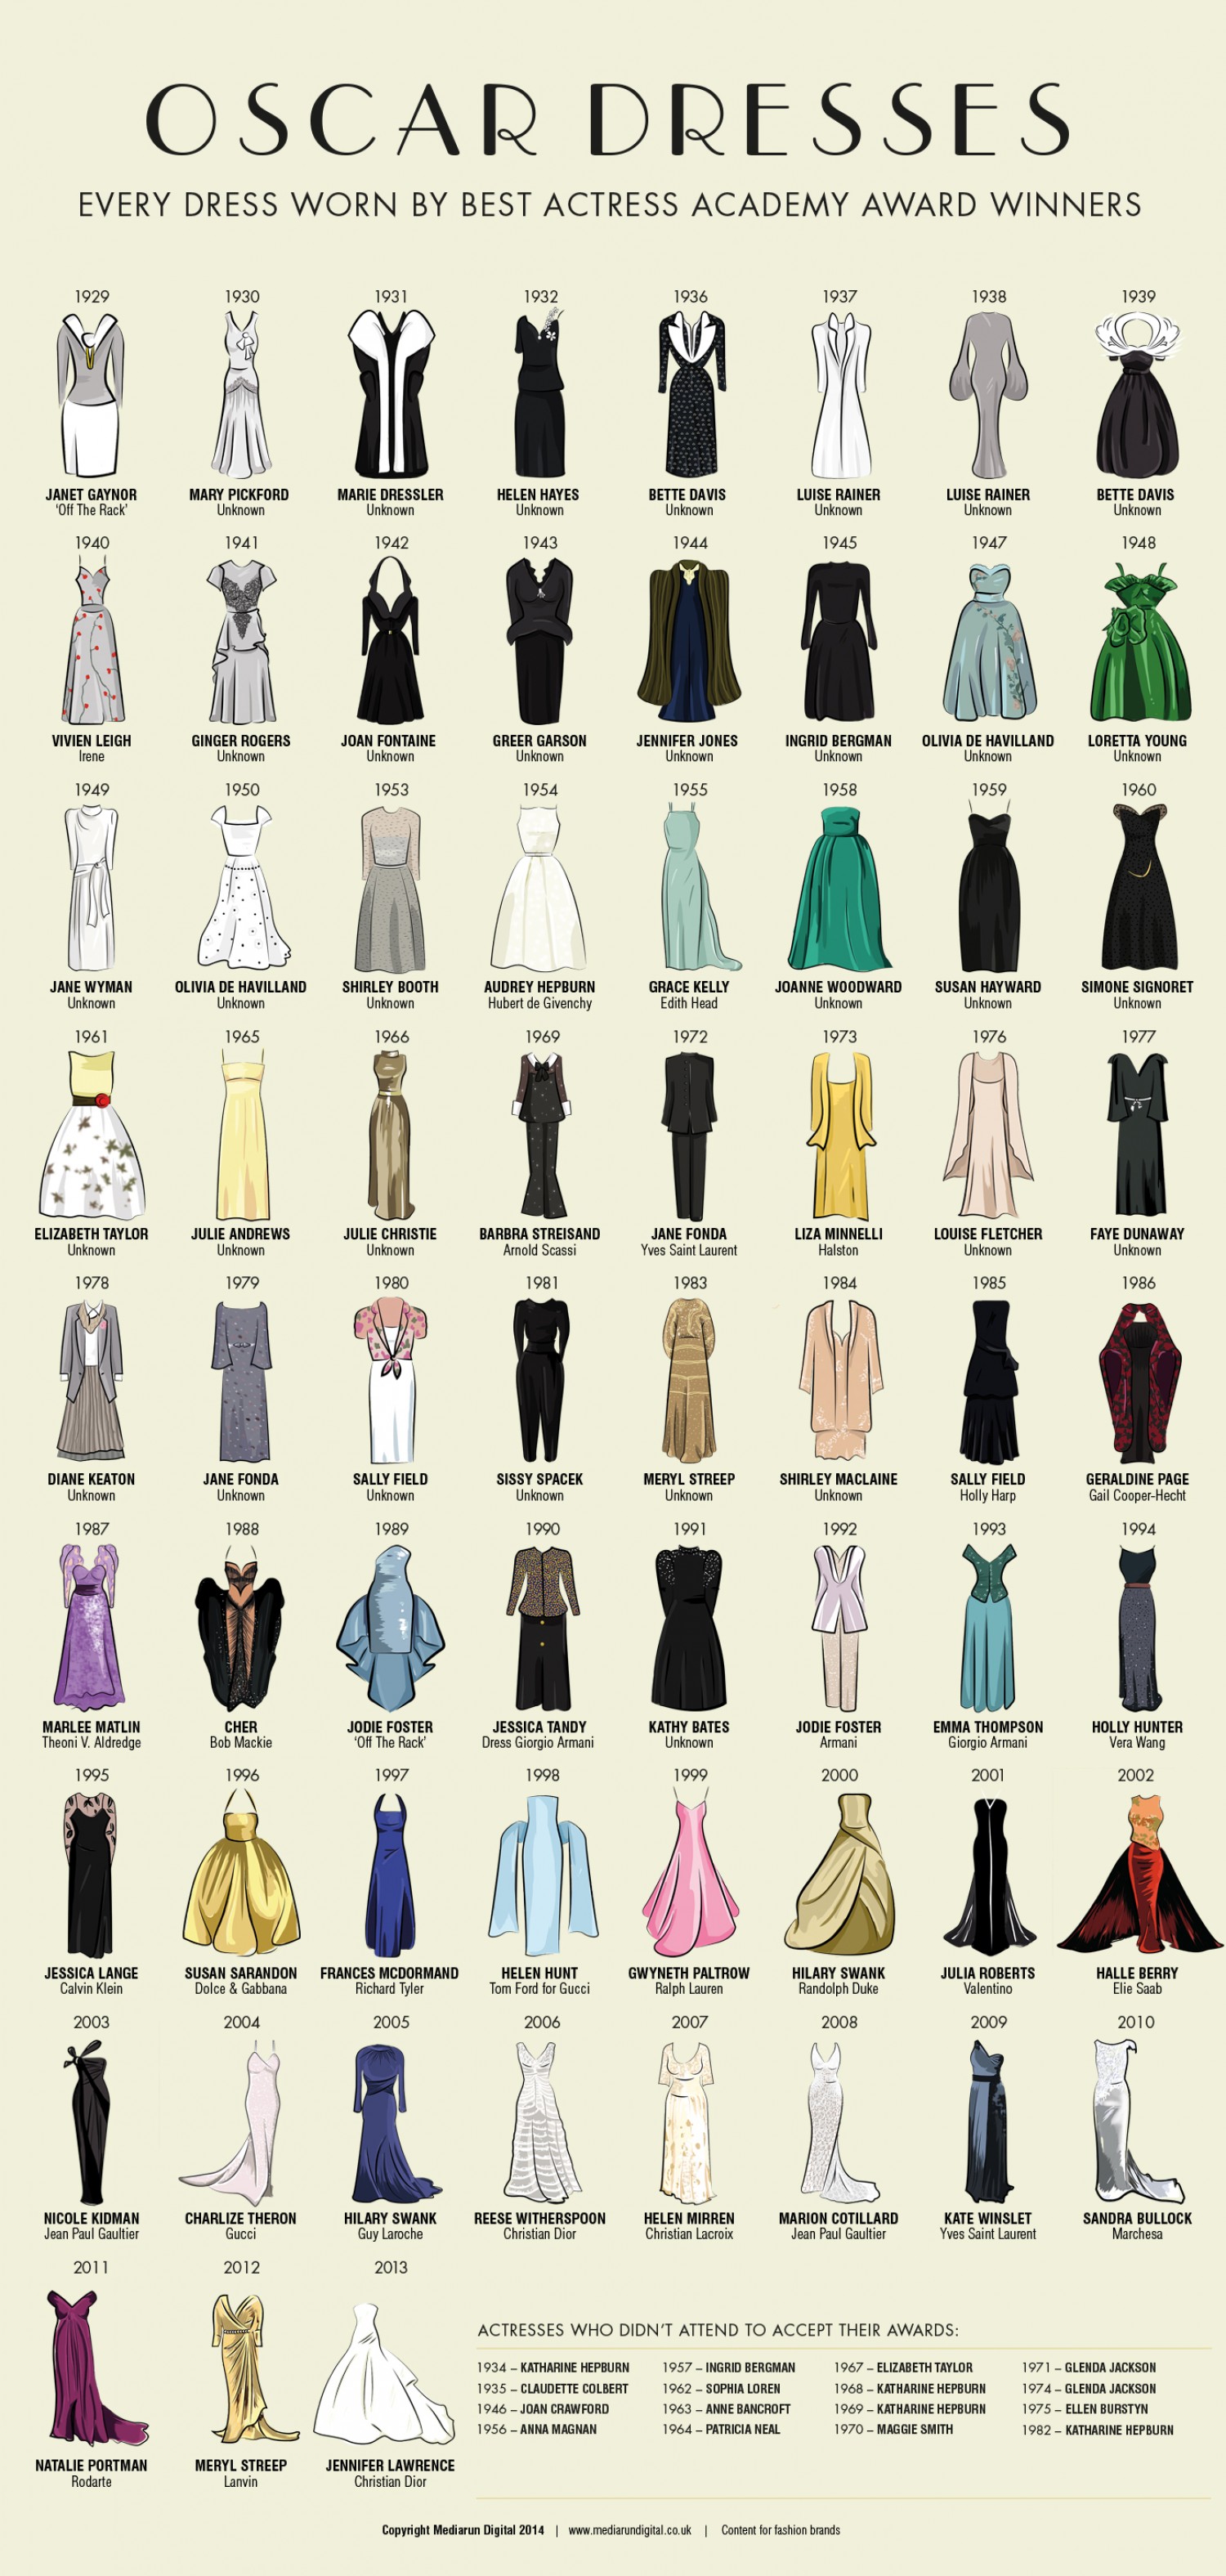 oscar-dresses--every-dress-worn-by-best-actress-academy-award-winners_530b85eabcab5_w1500